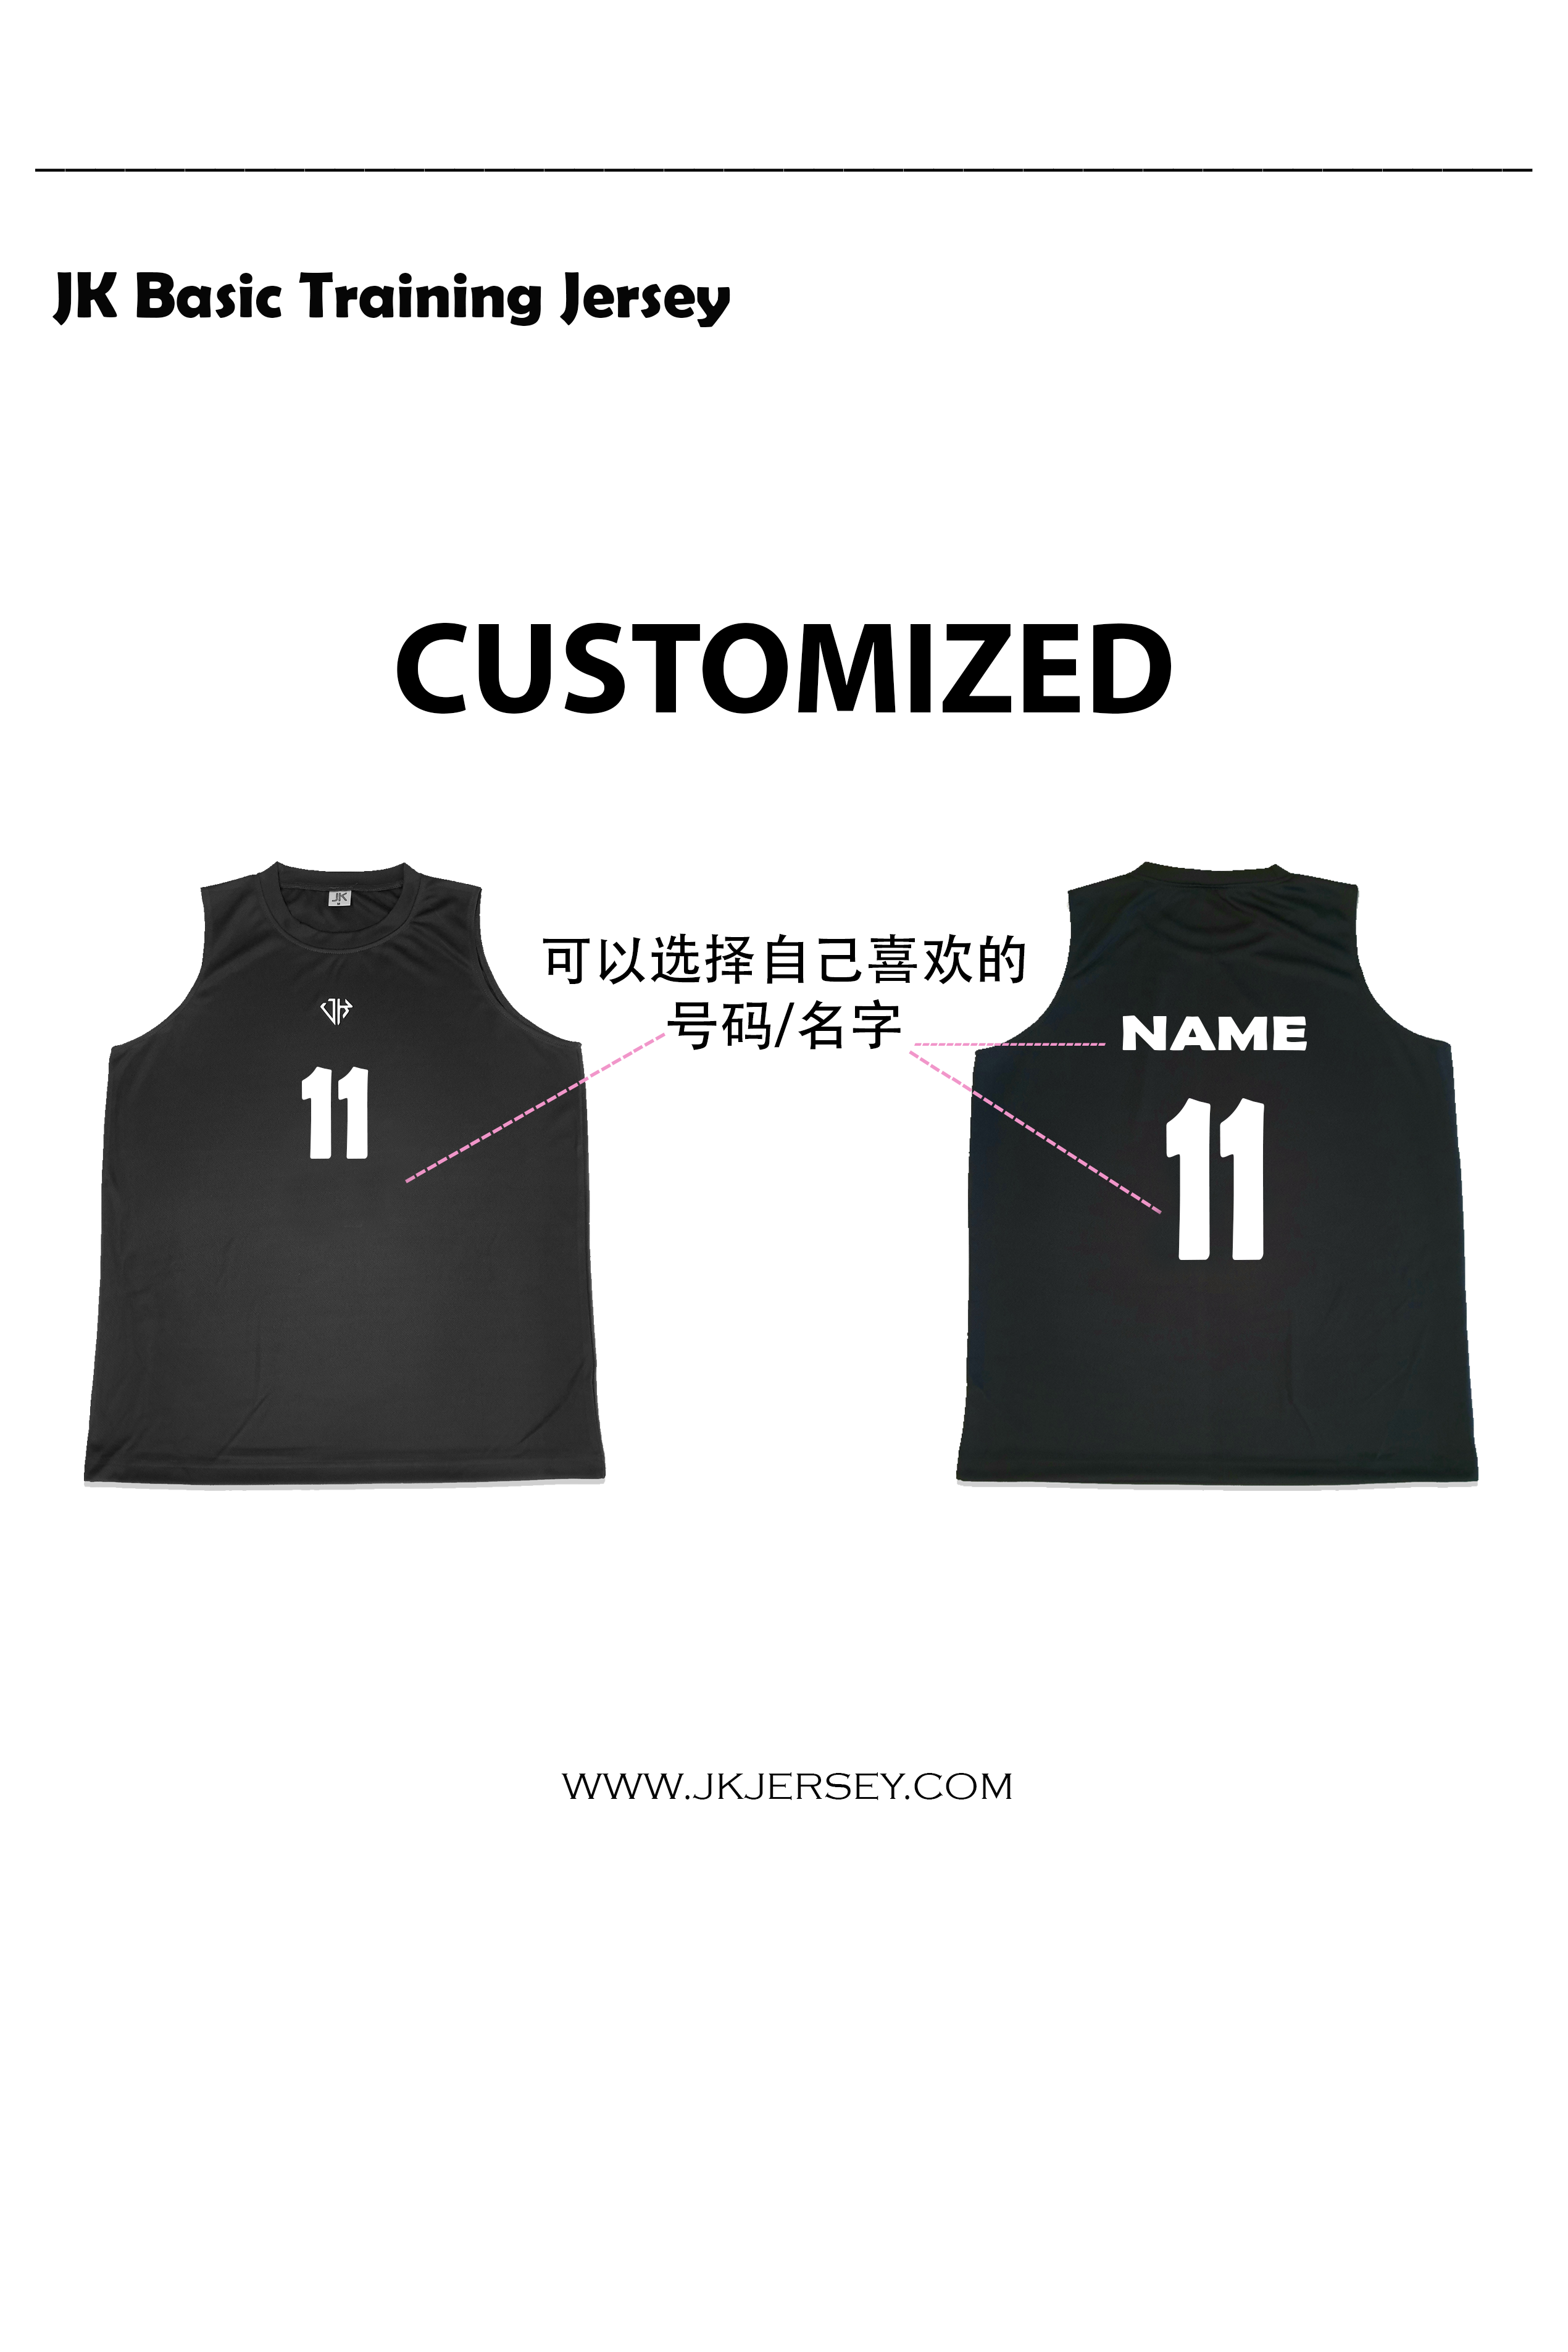 basic training jersey customizes.png